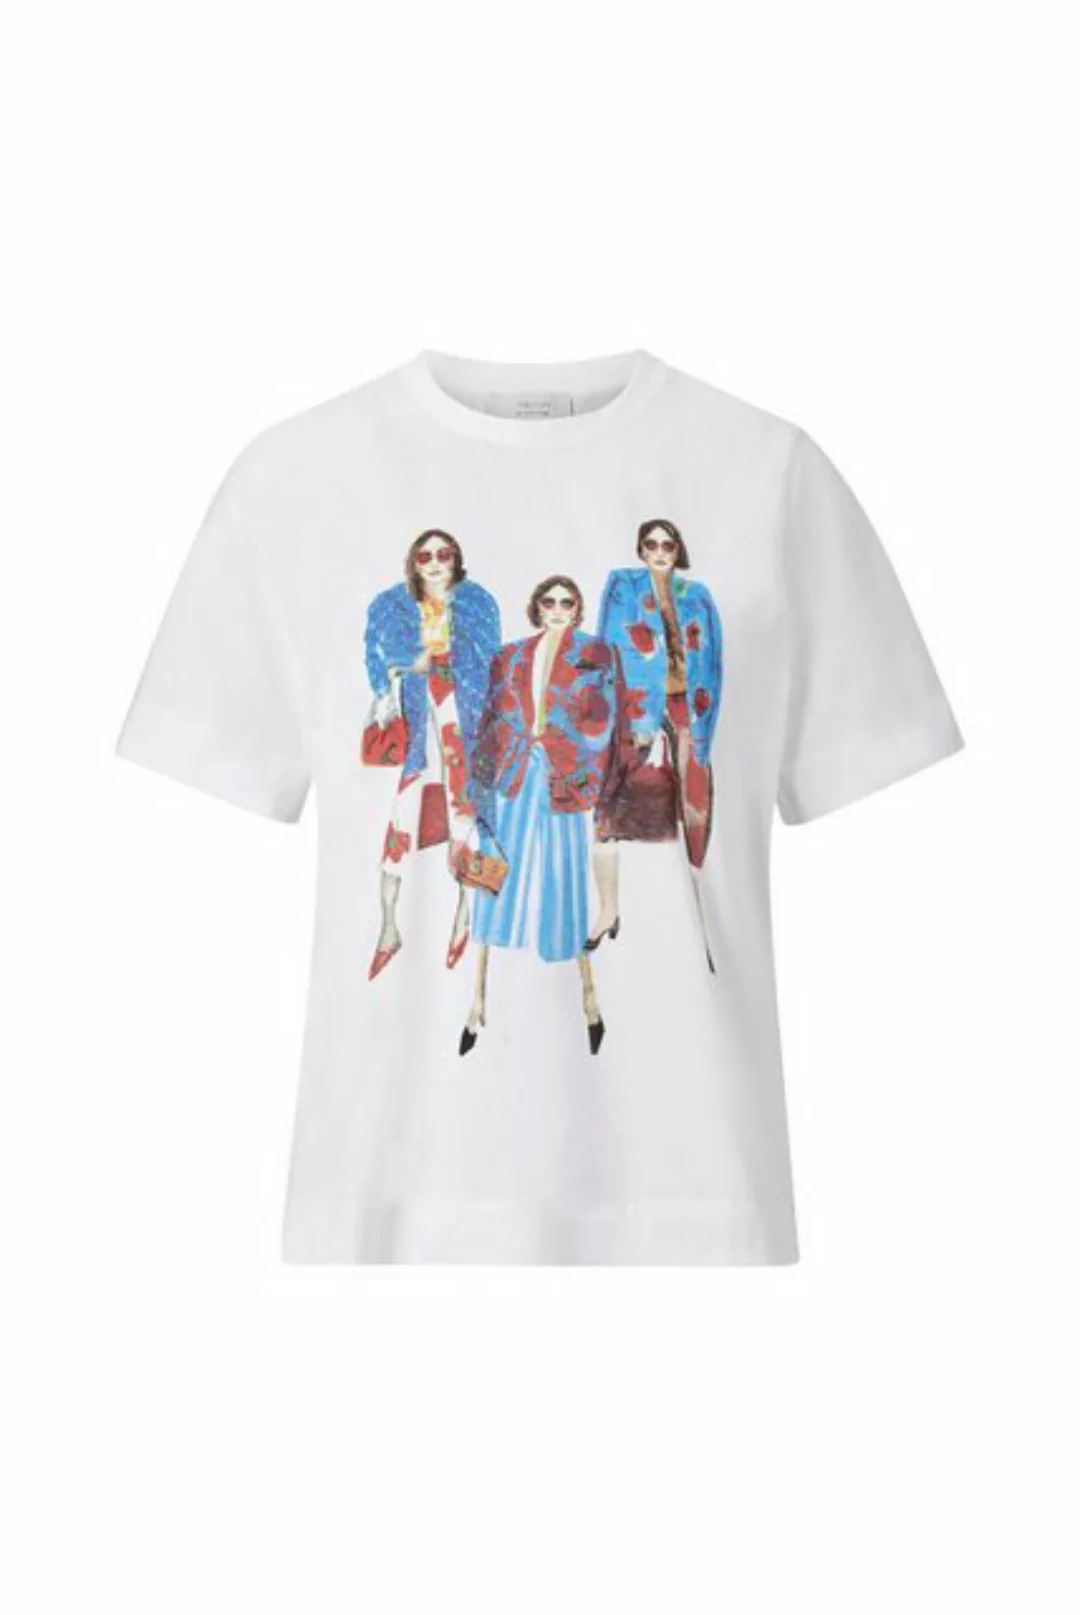 Rich & Royal T-Shirt easy fit T-Shirt women print, white günstig online kaufen